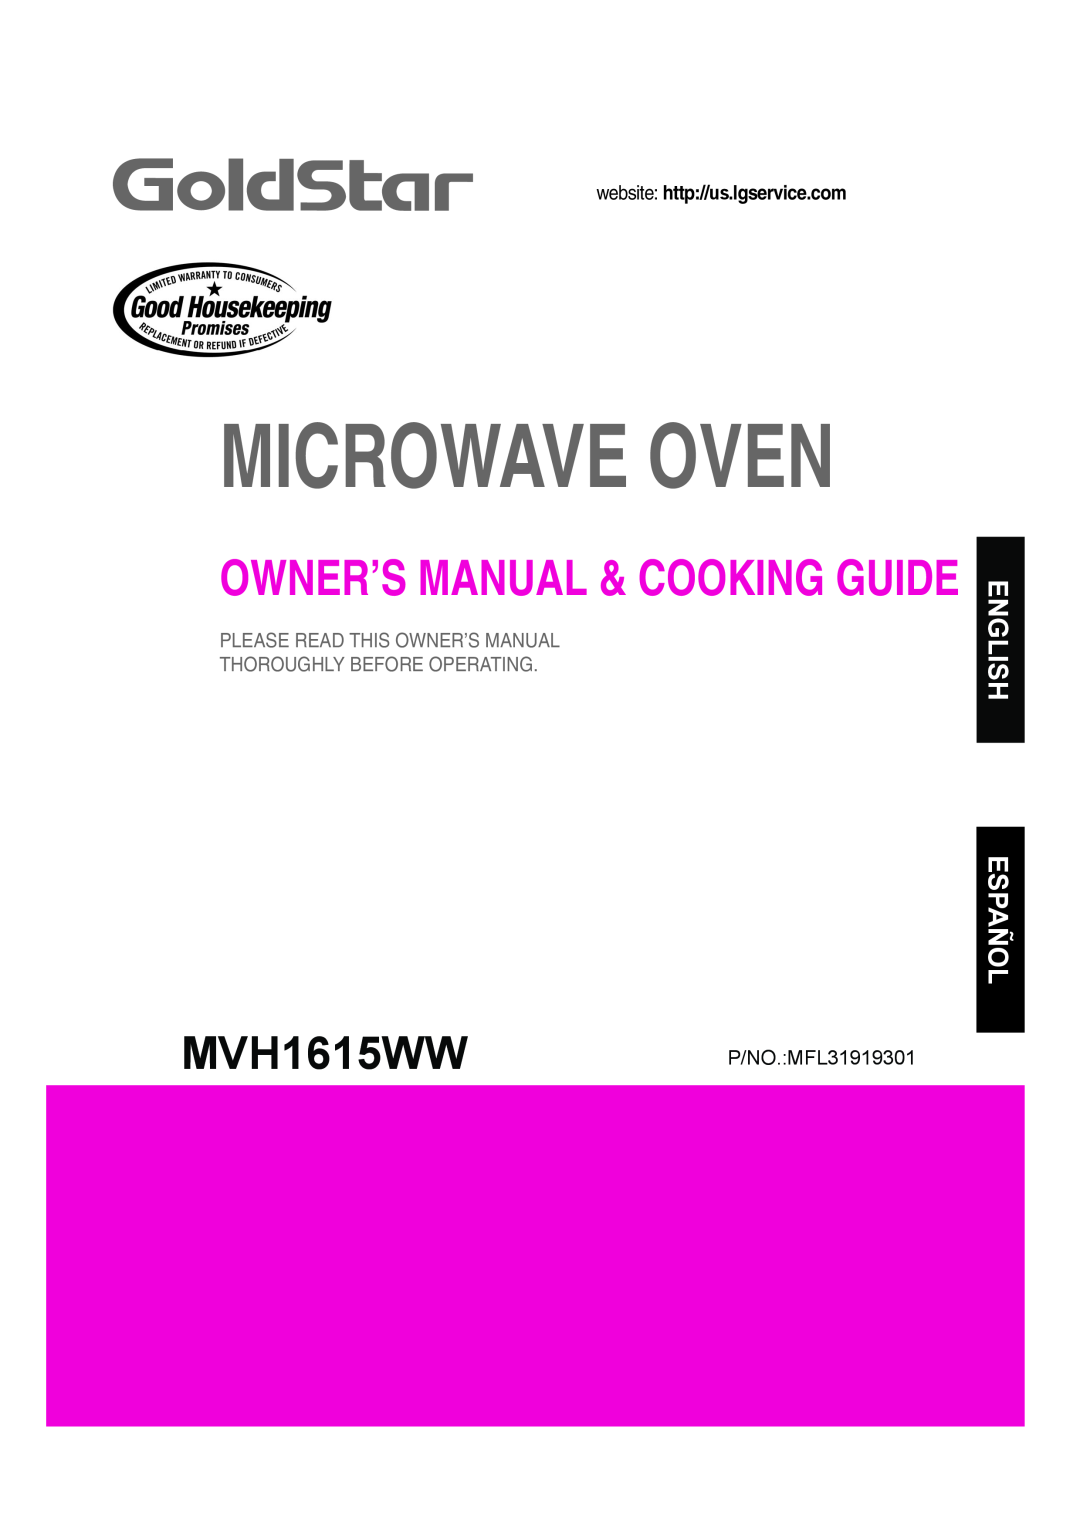 Goldstar owner manual English Español, Microwave Oven, Thoroughly Before Operating, MVH1615WW P/NO. MFL31919301 